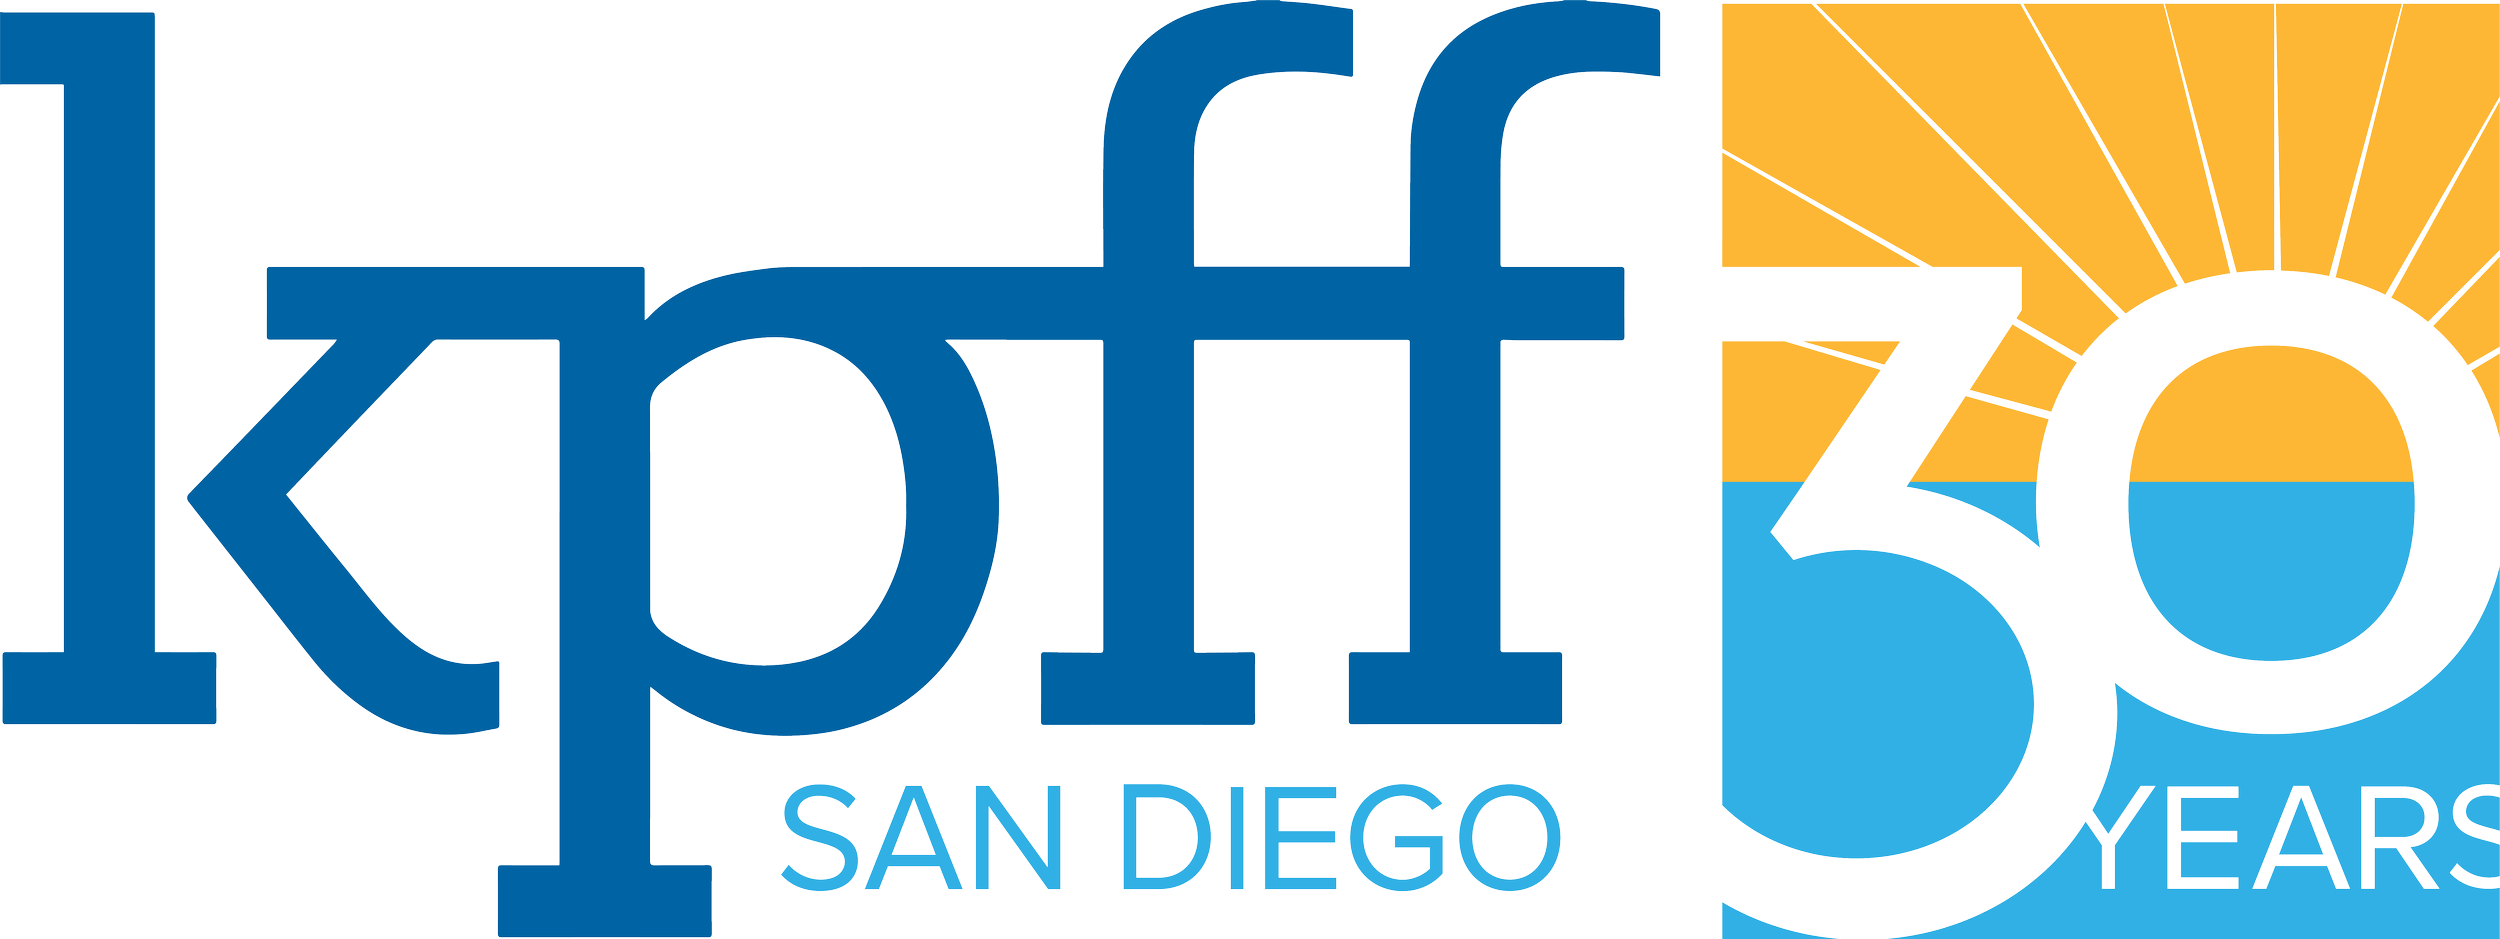 KPFF-San Diego-30 Yrs.png